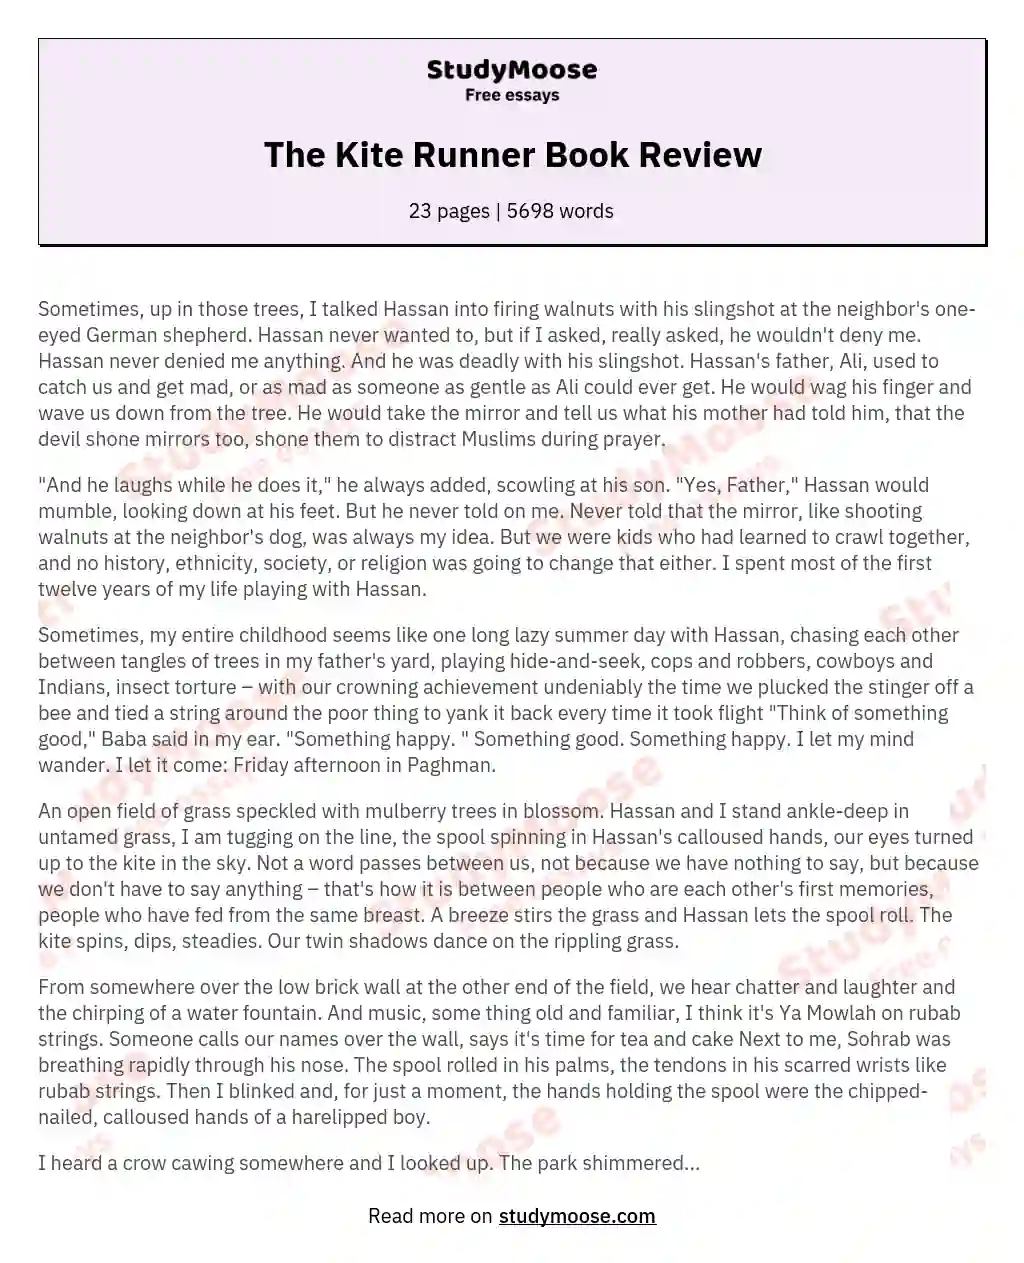 The Kite Runner Book Review essay